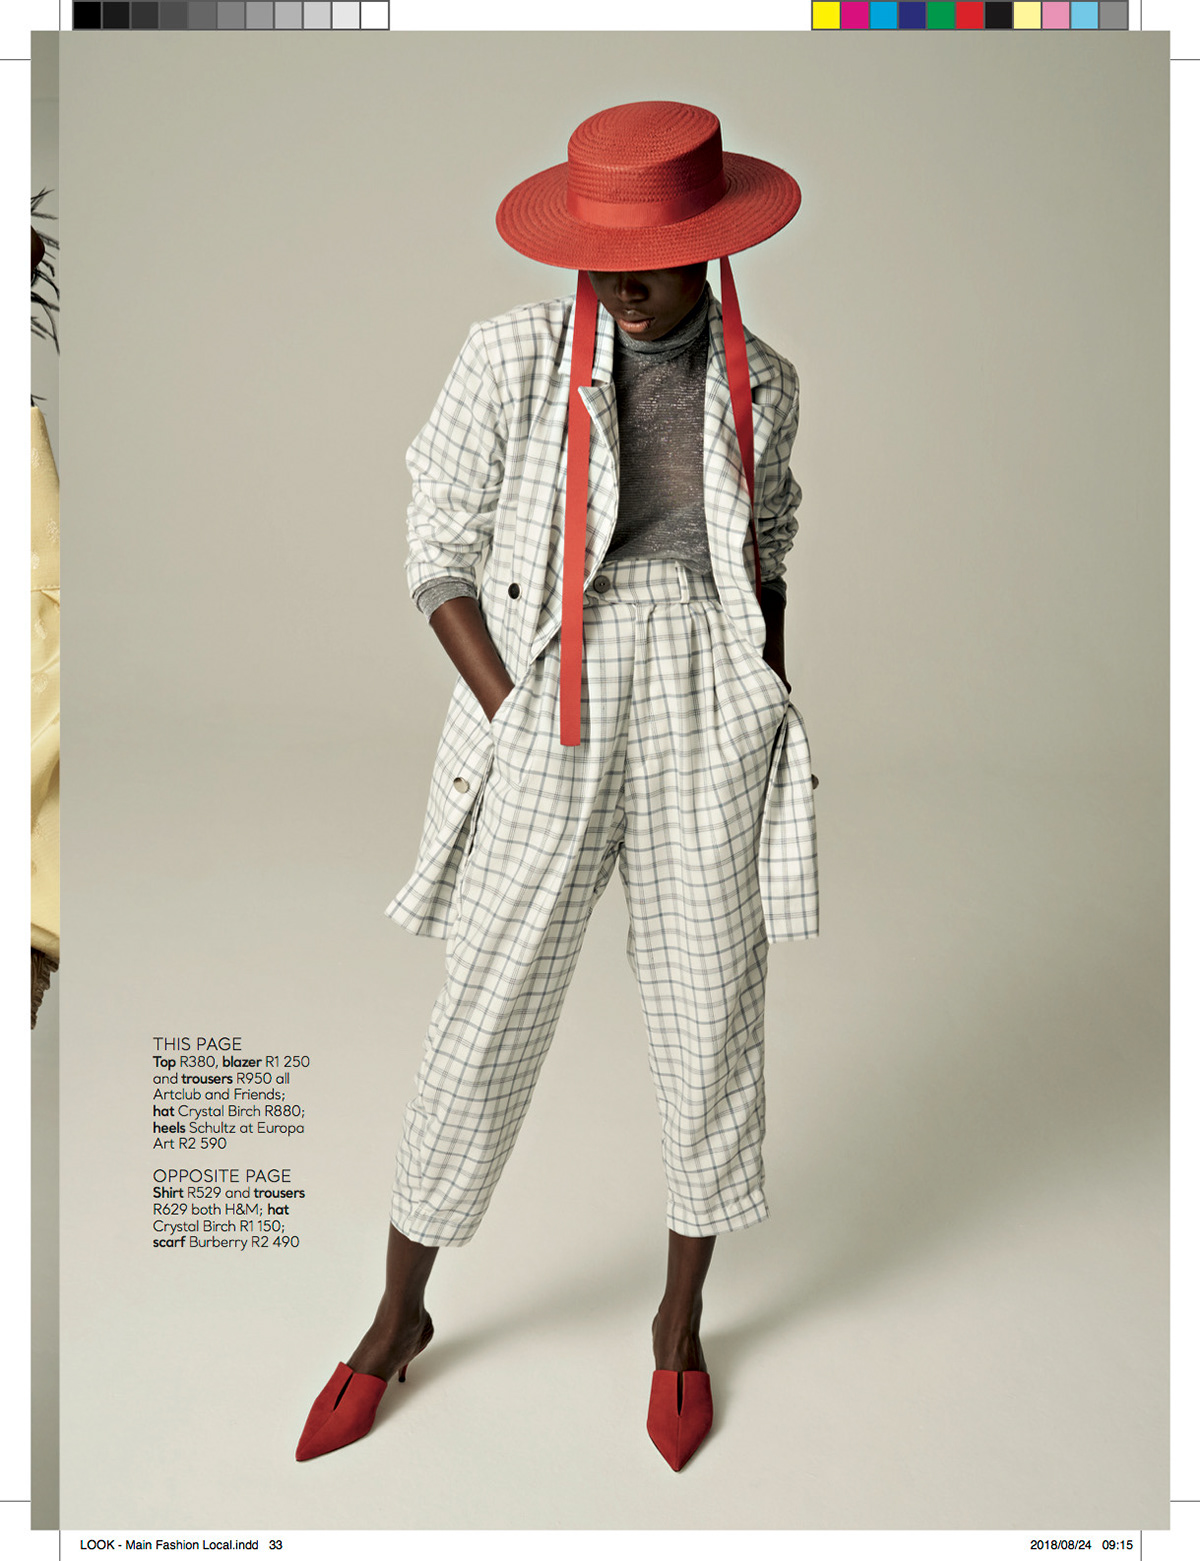 fashion photography model editorial magazine glamour fashion styling